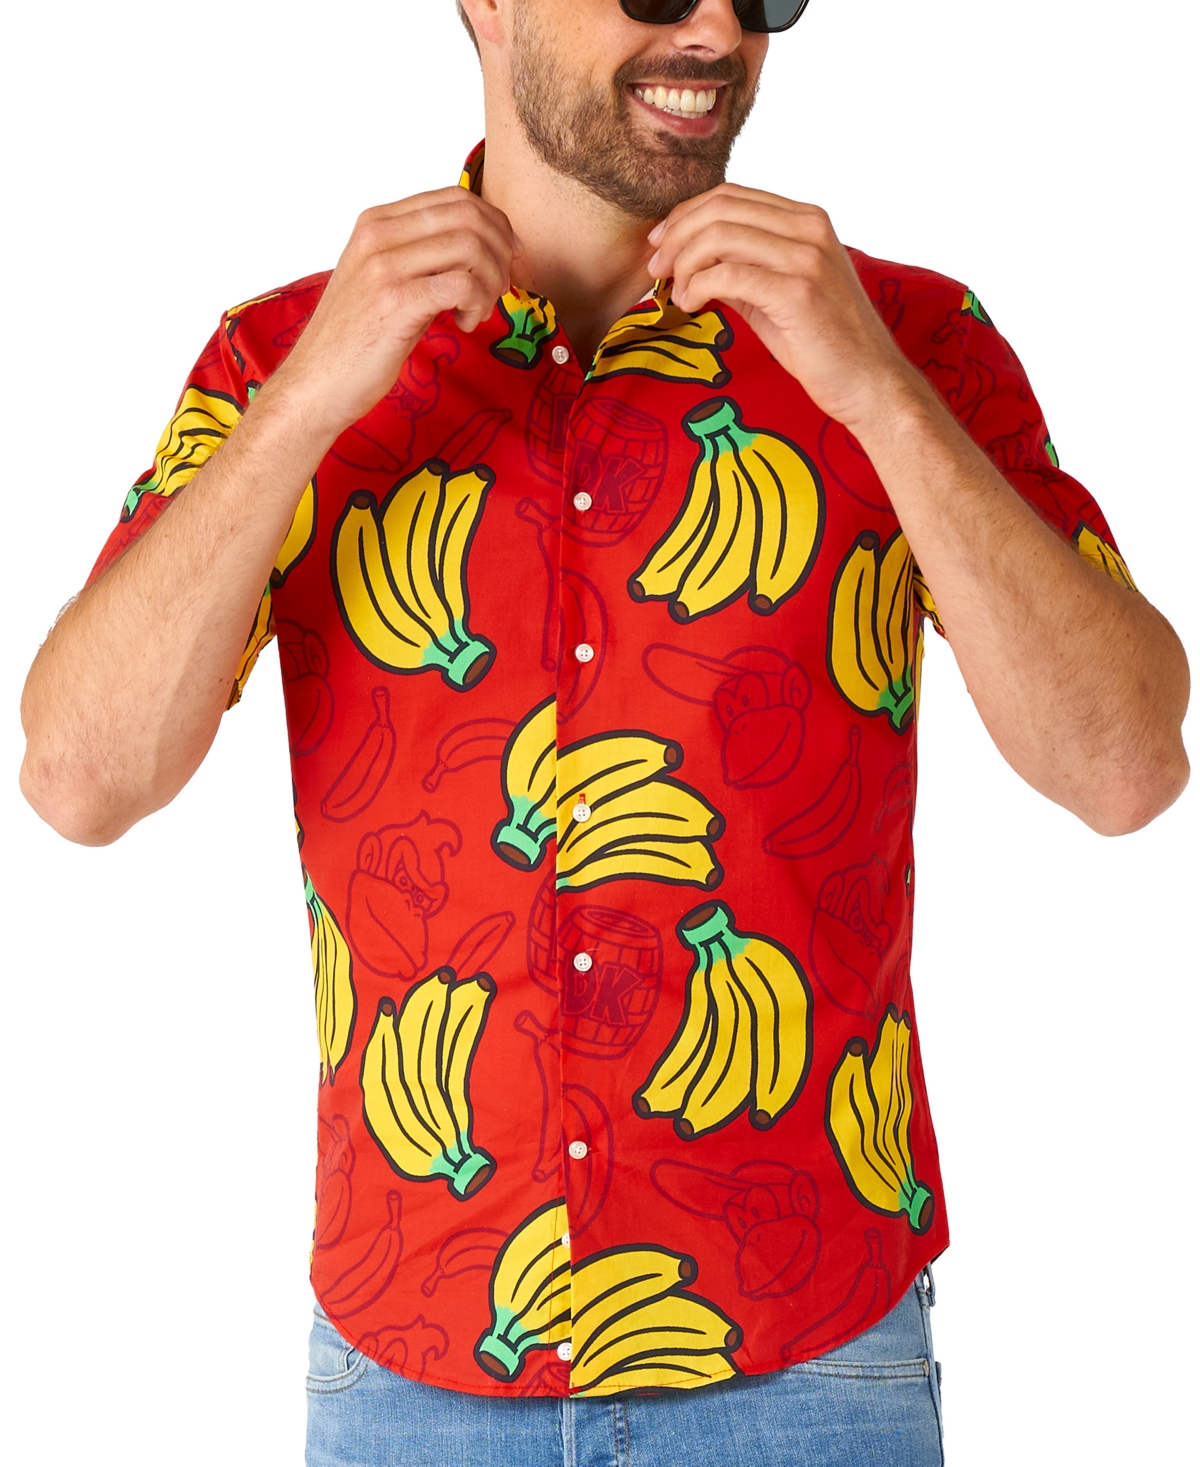 Men's Short-Sleeve Donkey Kong Graphic Shirt - Red